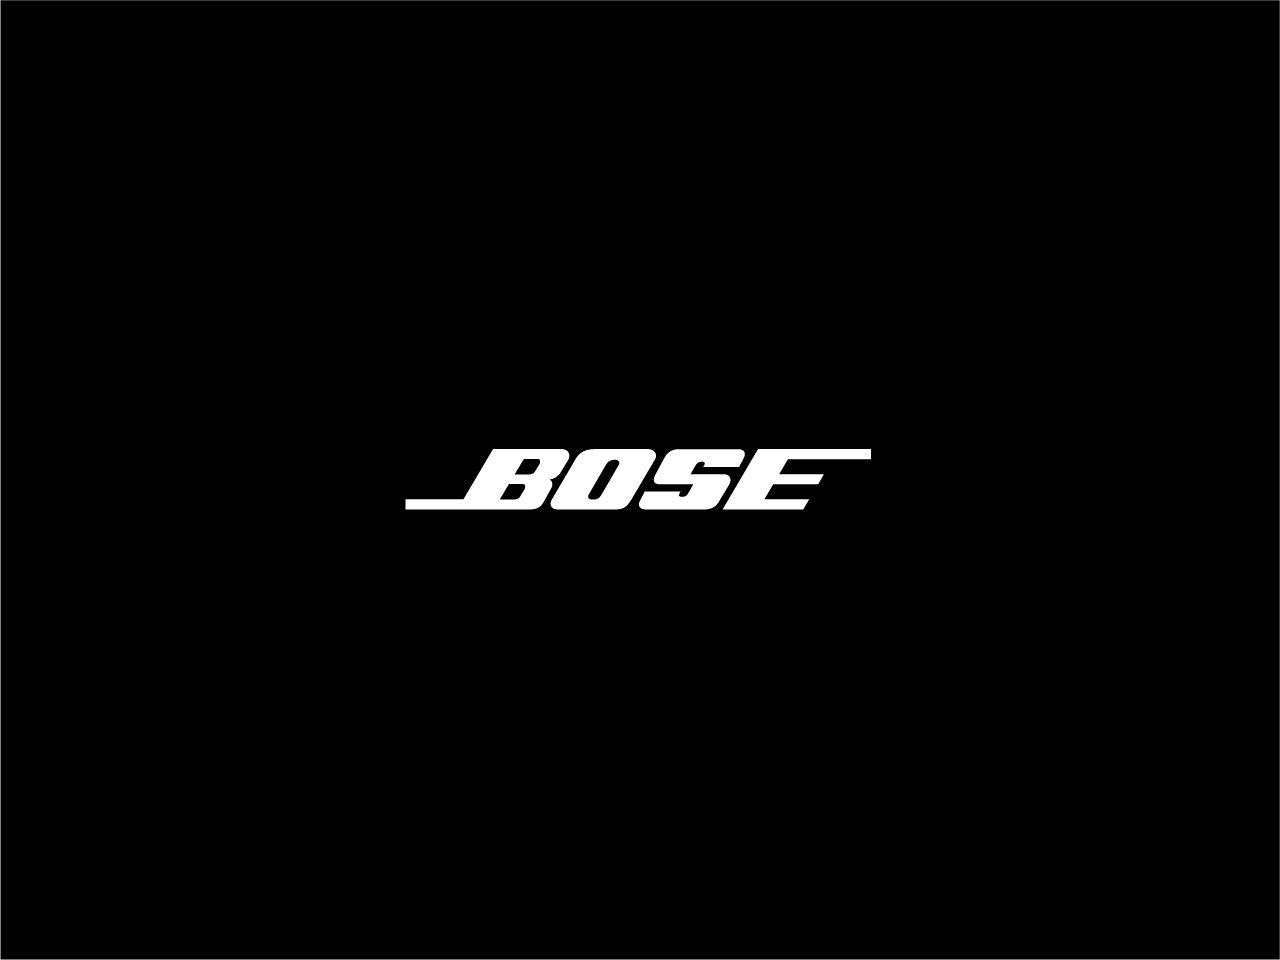 Bose Logo - BOSE Logotype - Similar to Sony's, this logotype is white text ...